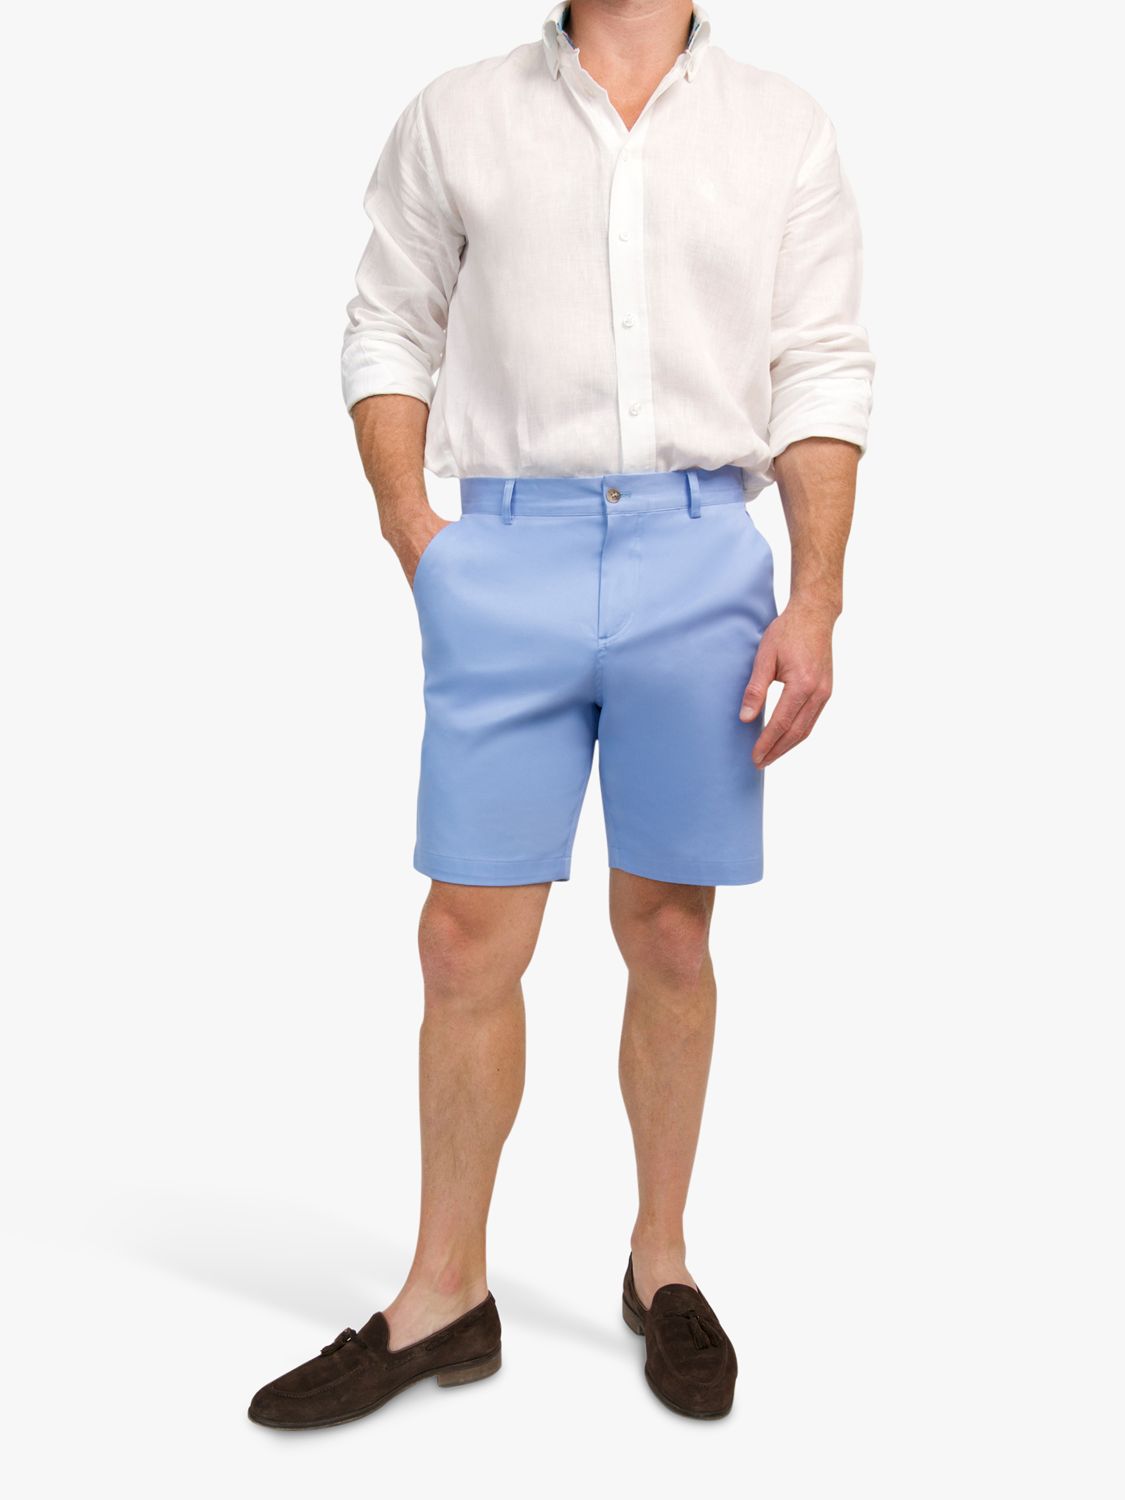 KOY Slim Chinos Shorts, Light Blue, 34R